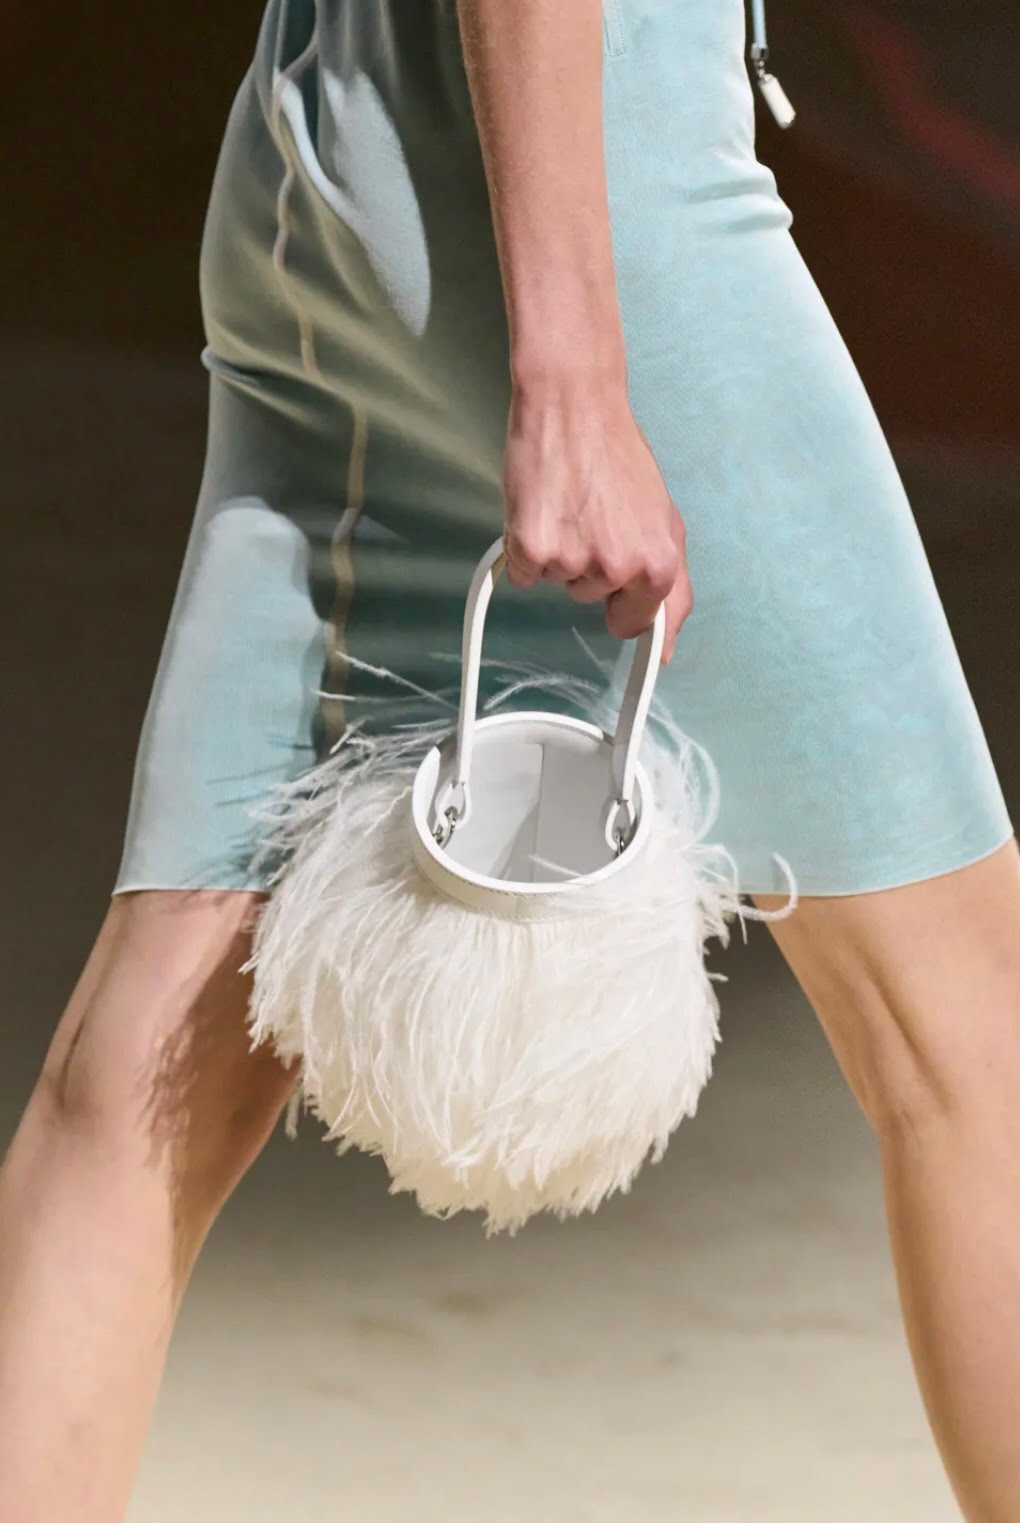 Hermès Spring/Summer 2021 Introduces New Bag Styles - PurseBop